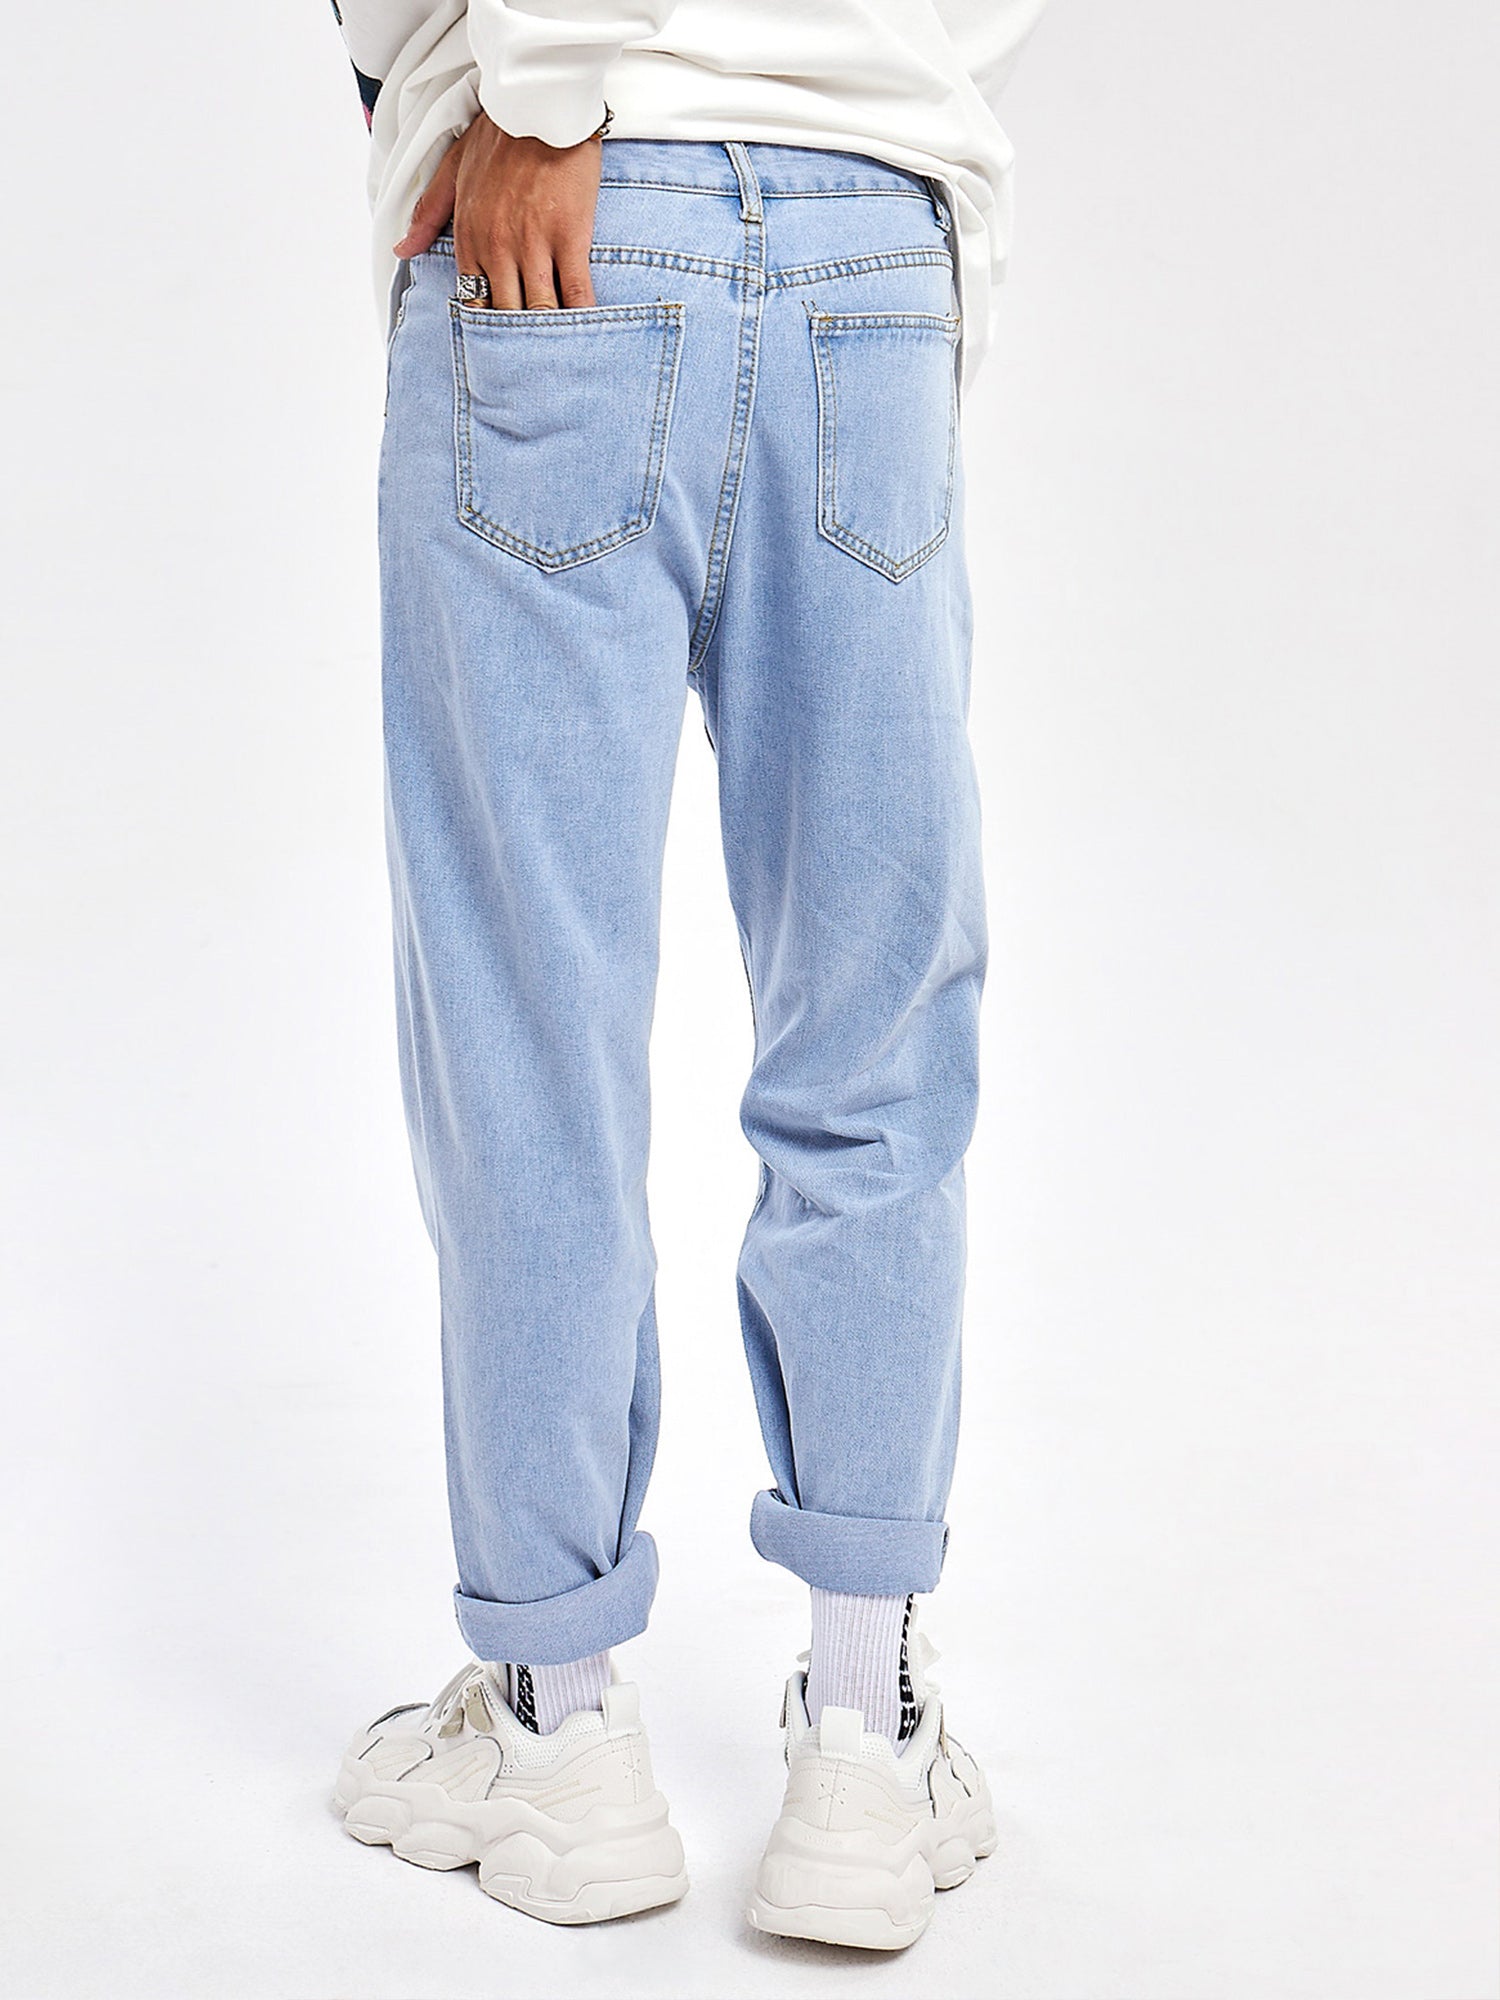 JUSTNOTAG Jeans larghi e lunghi azzurri con stampa HipHop da strada casual